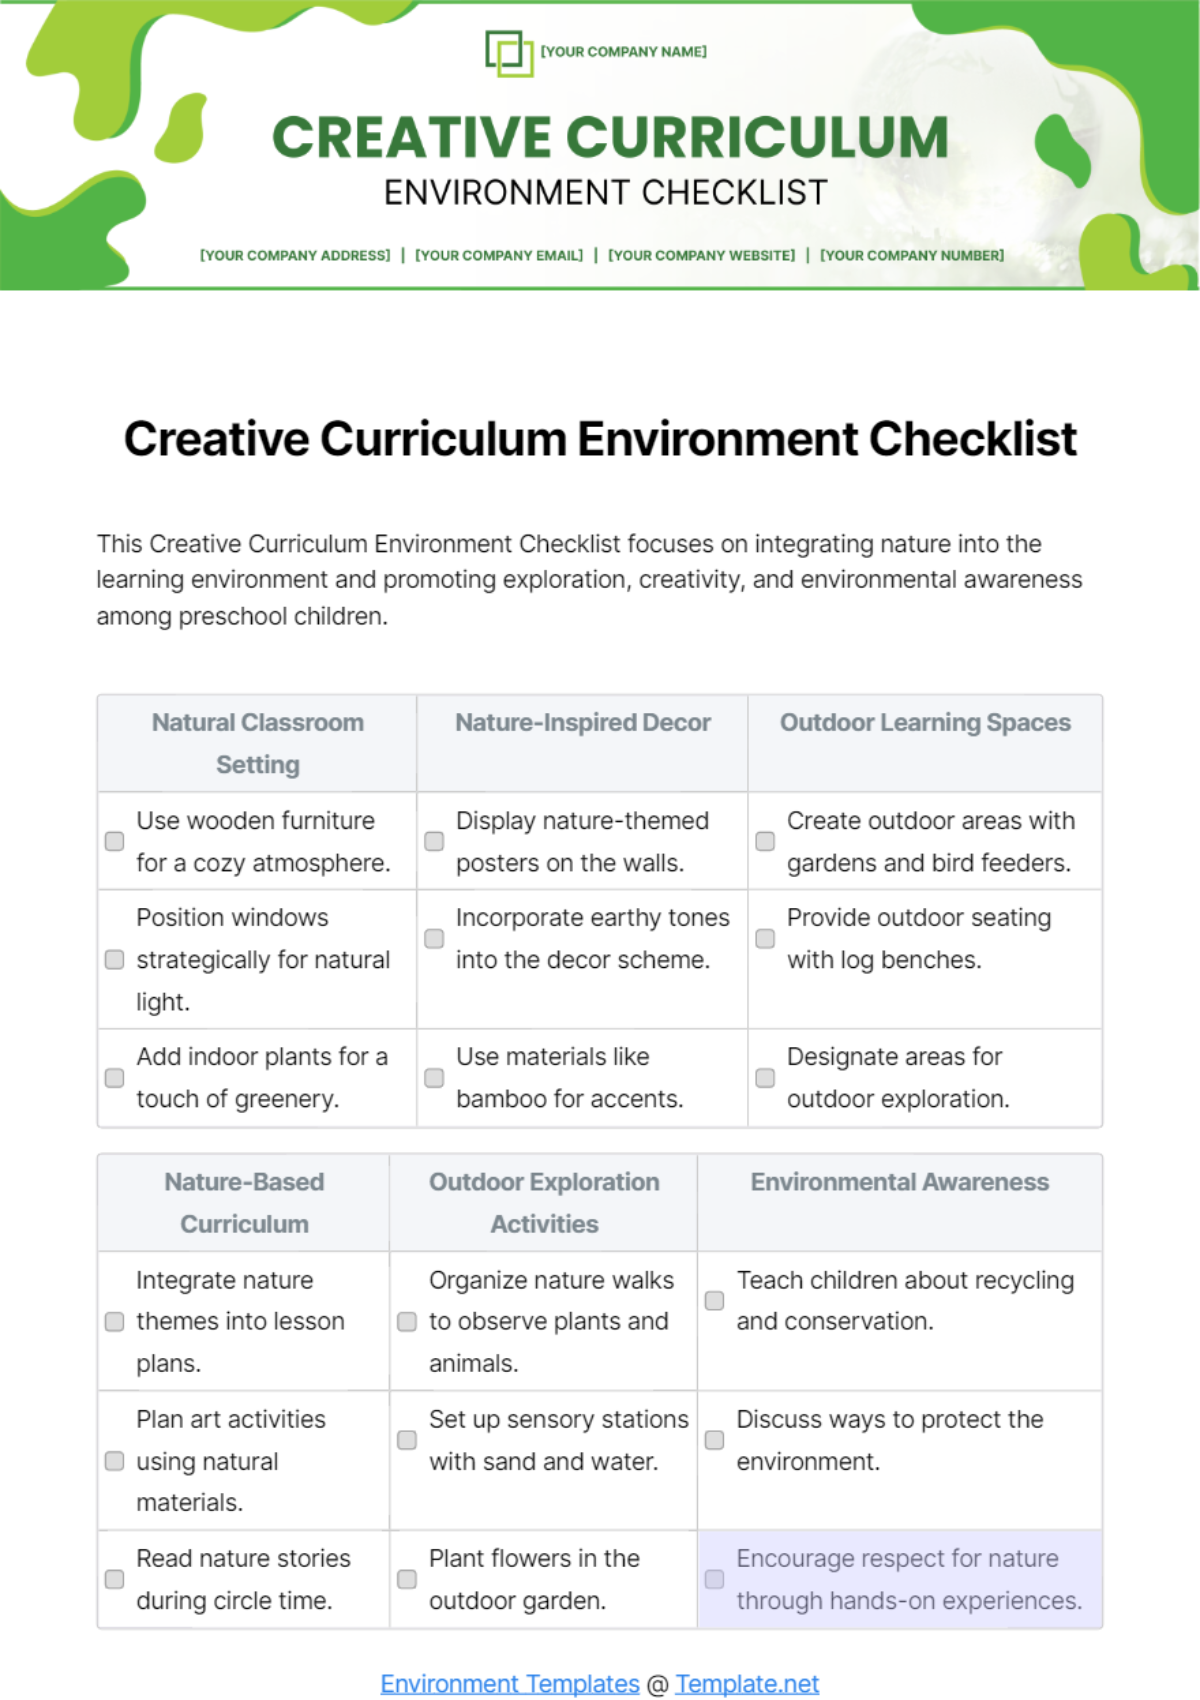 Creative Curriculum Environment Checklist Template